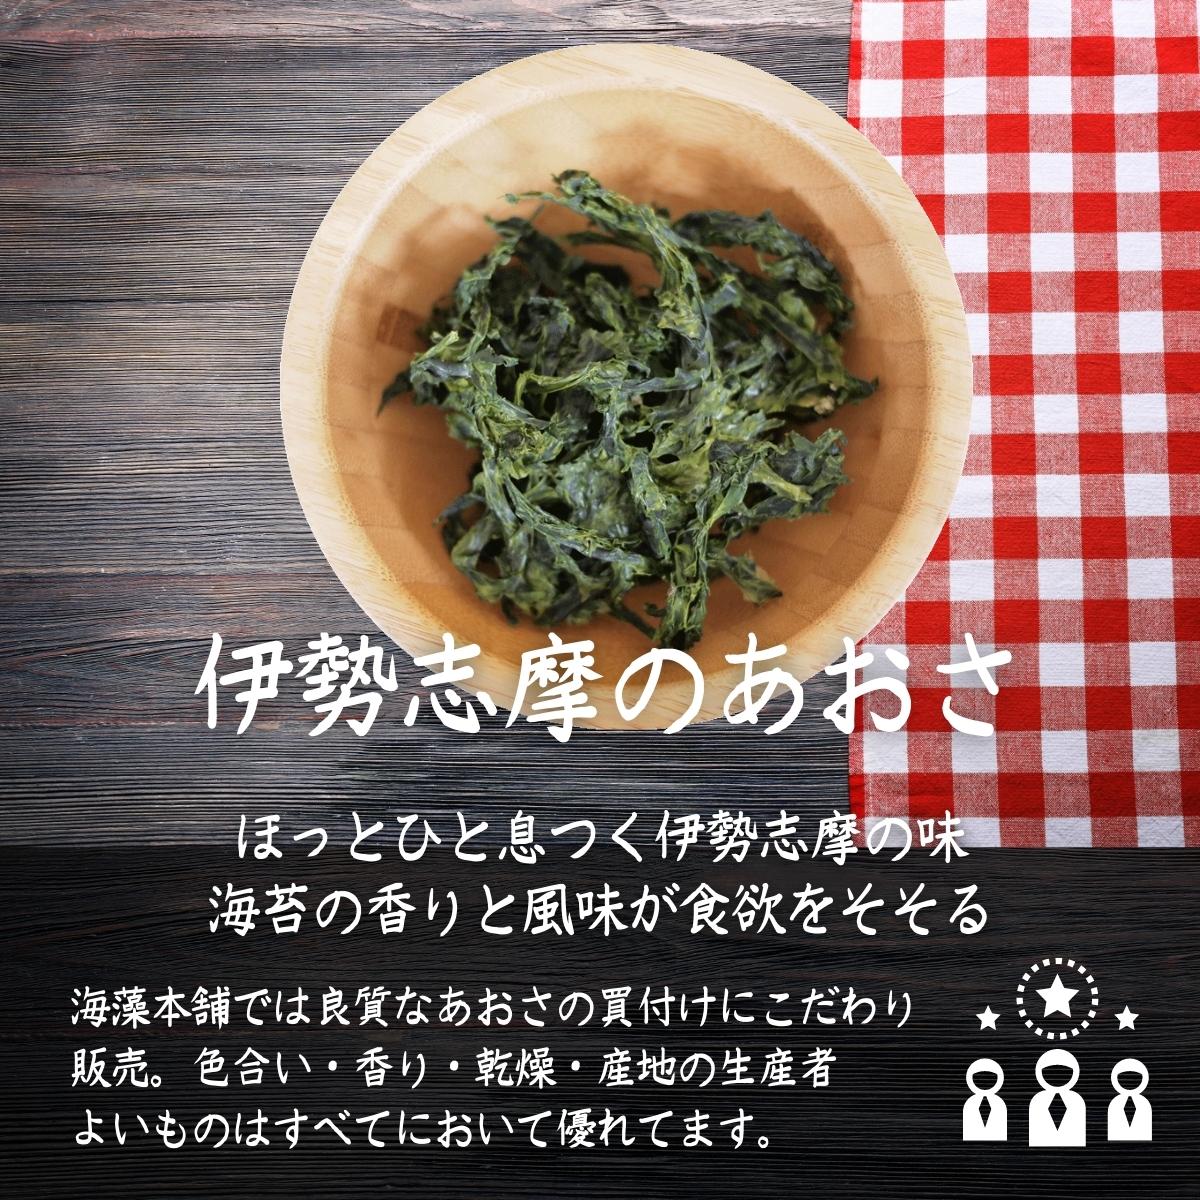  sea lettuce 200g (100g×2 sack ) three-ply prefecture Ise city .. sea lettuce seaweed 